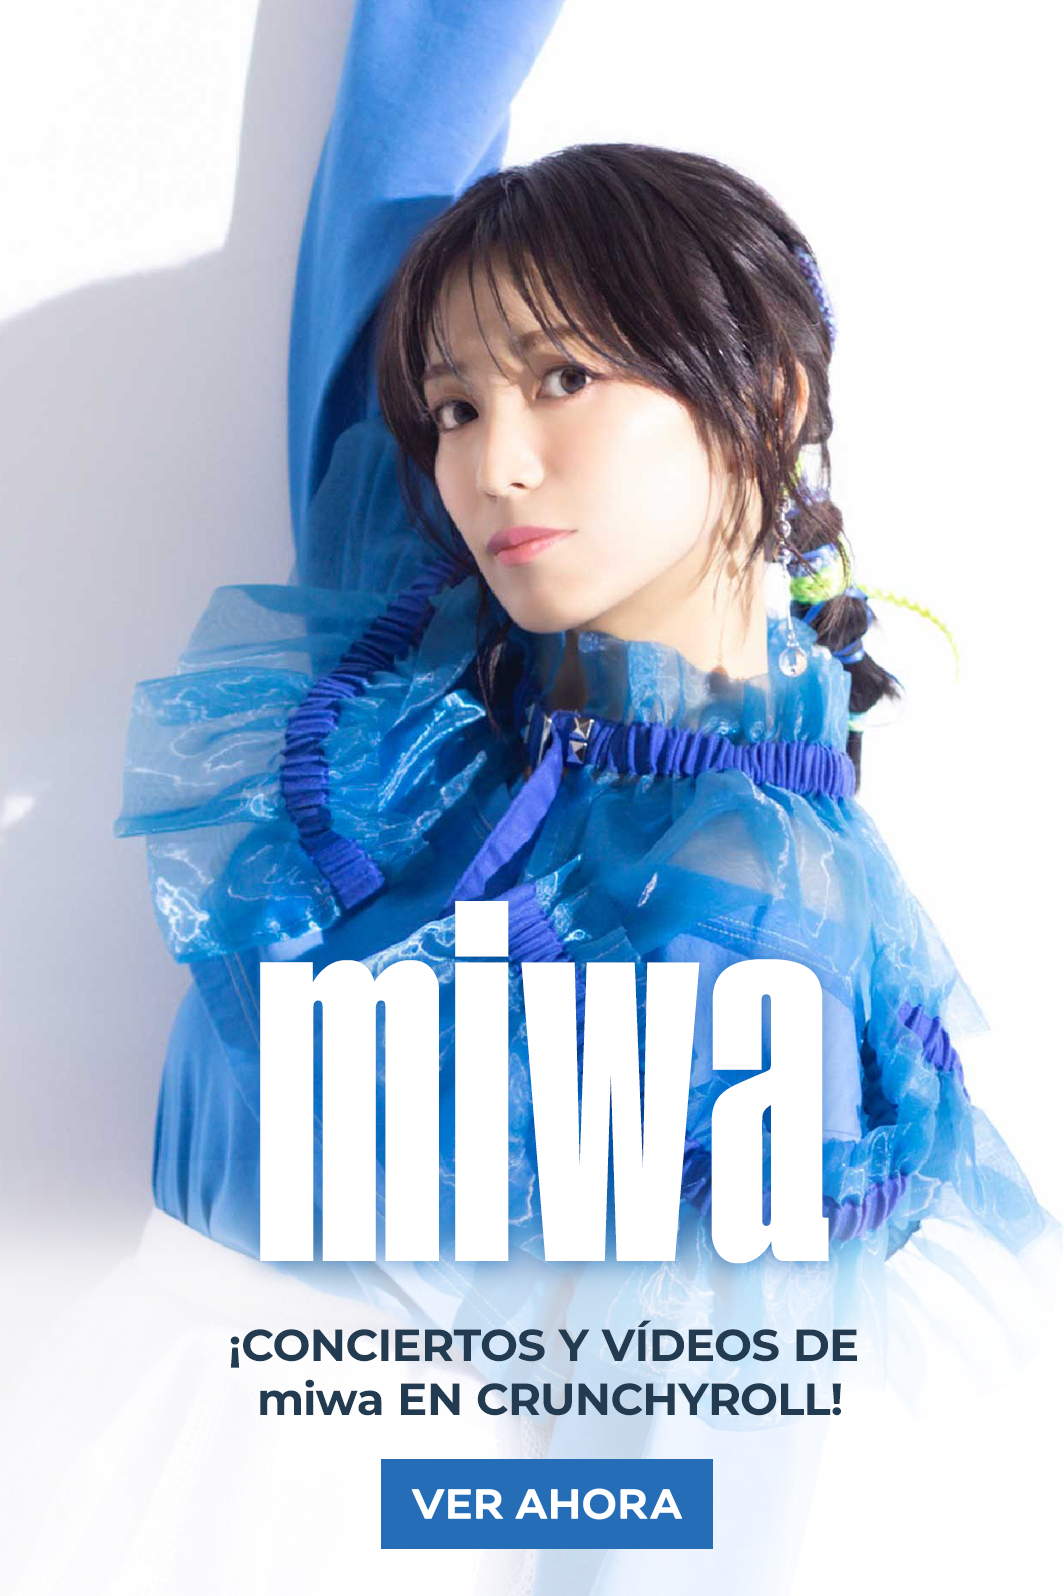 miwa concert tour 2018-2019 ”miwa THE BEST” [DVD](品) (shin |  www.wedea.com.br - その他